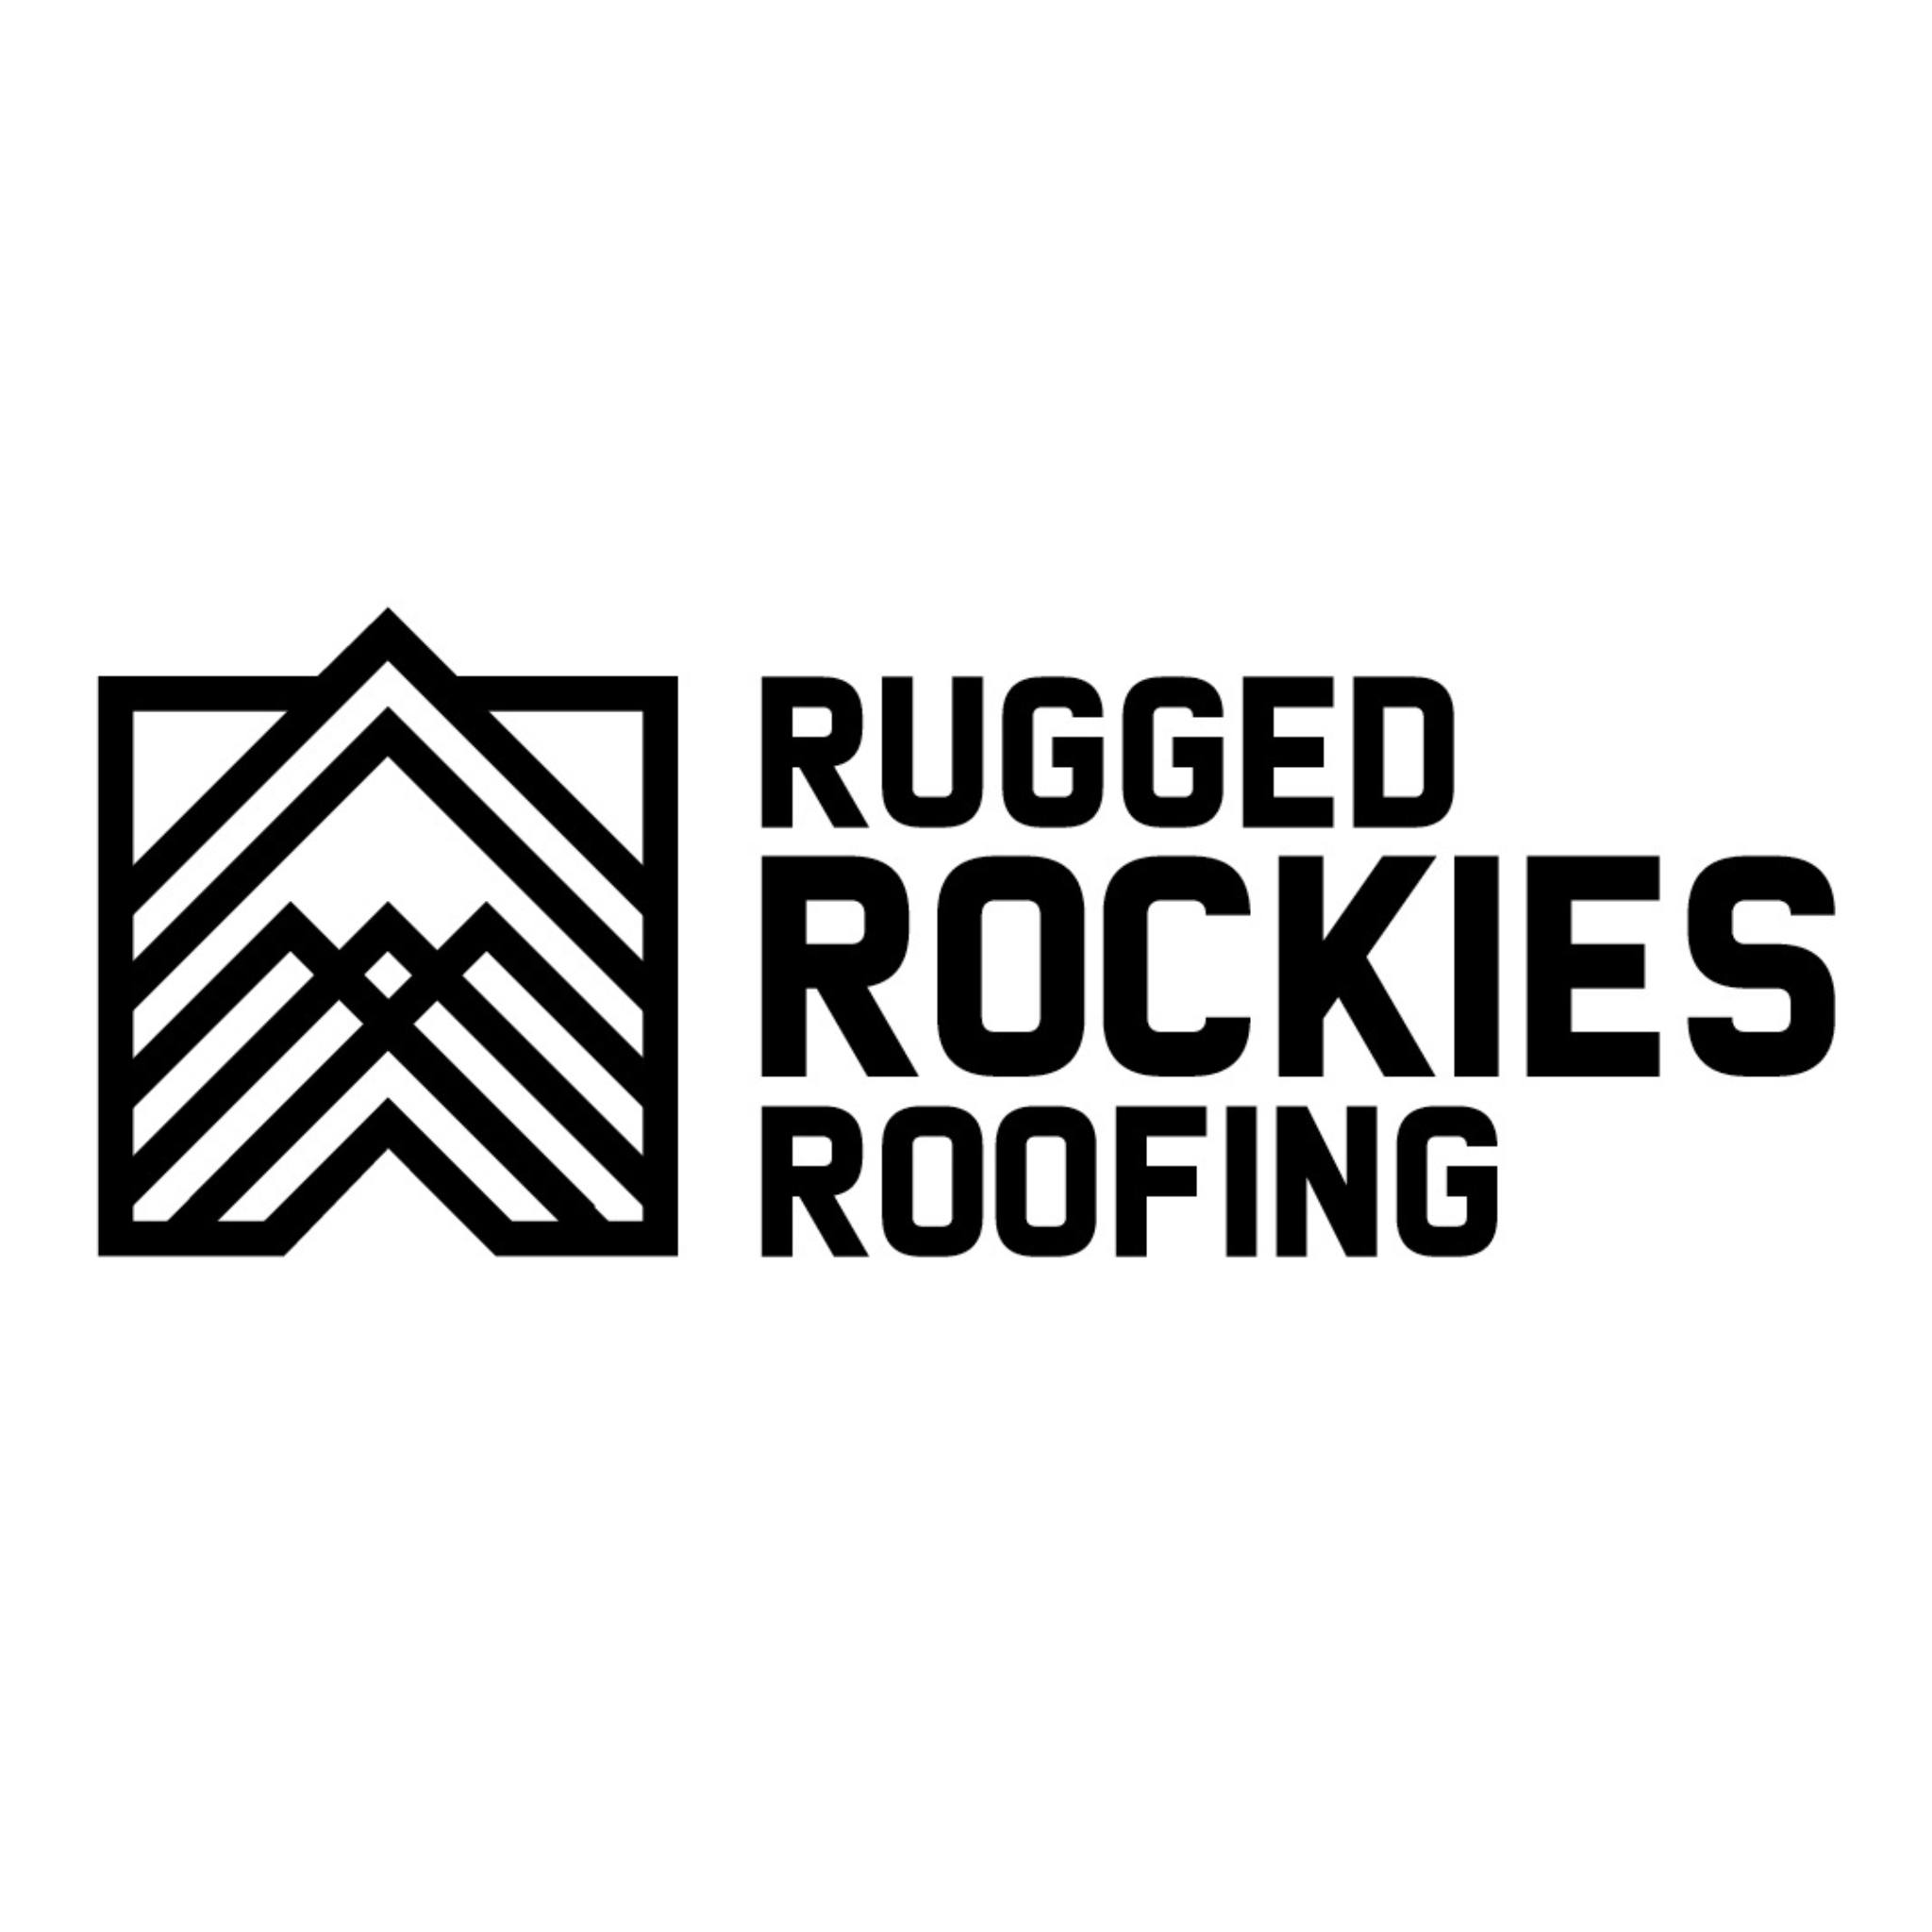 RUGGED ROCKIES ROOFING